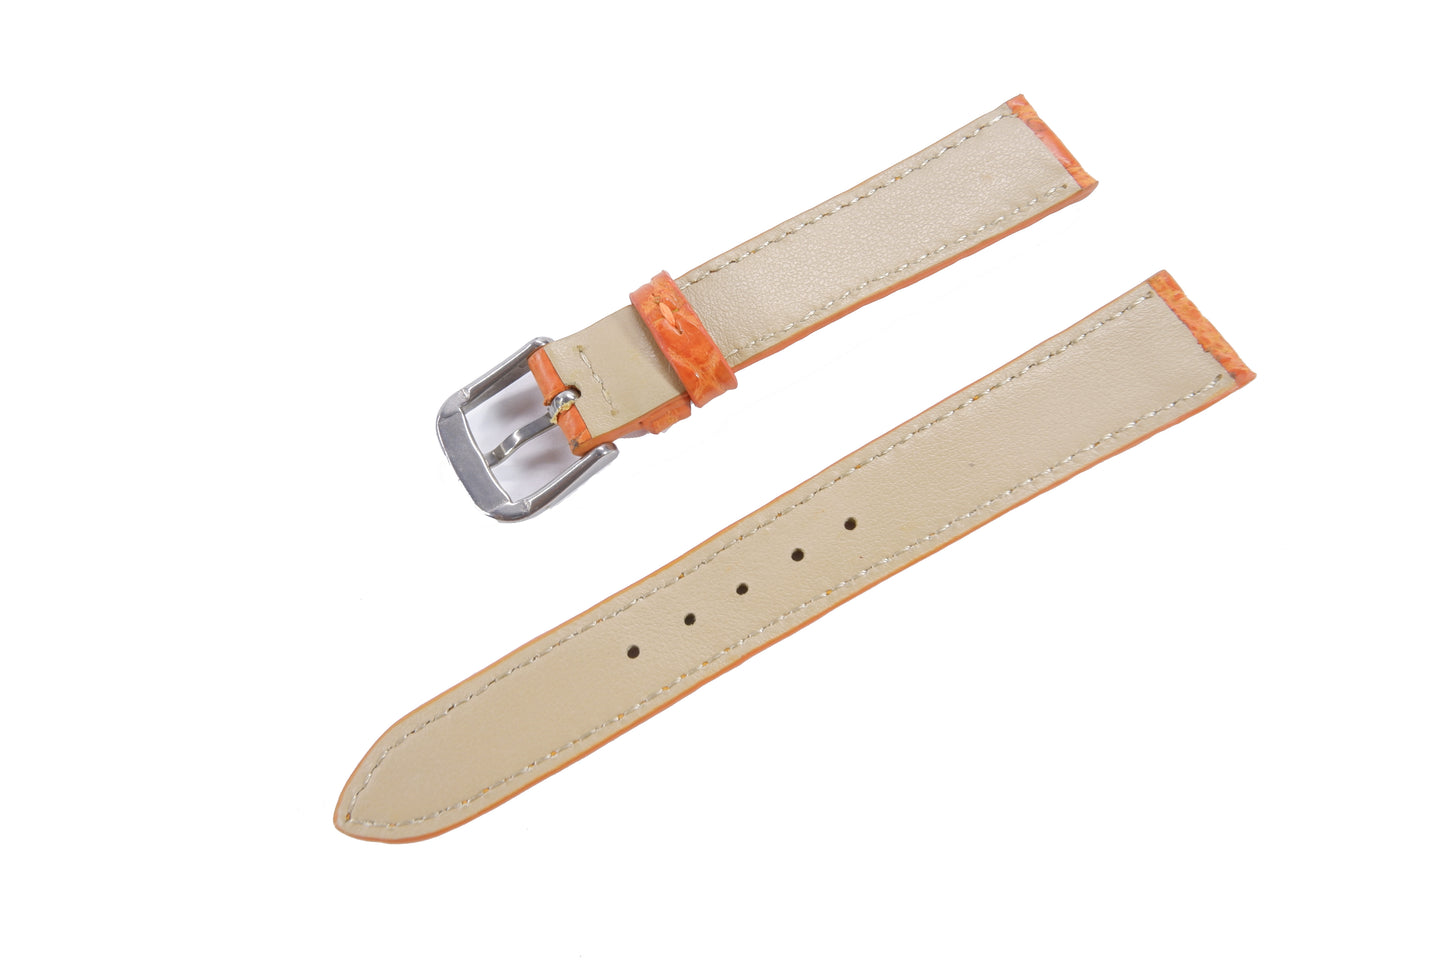 Genuine Crocodile Skin Leather Watch Strap Orange Band with Buckle